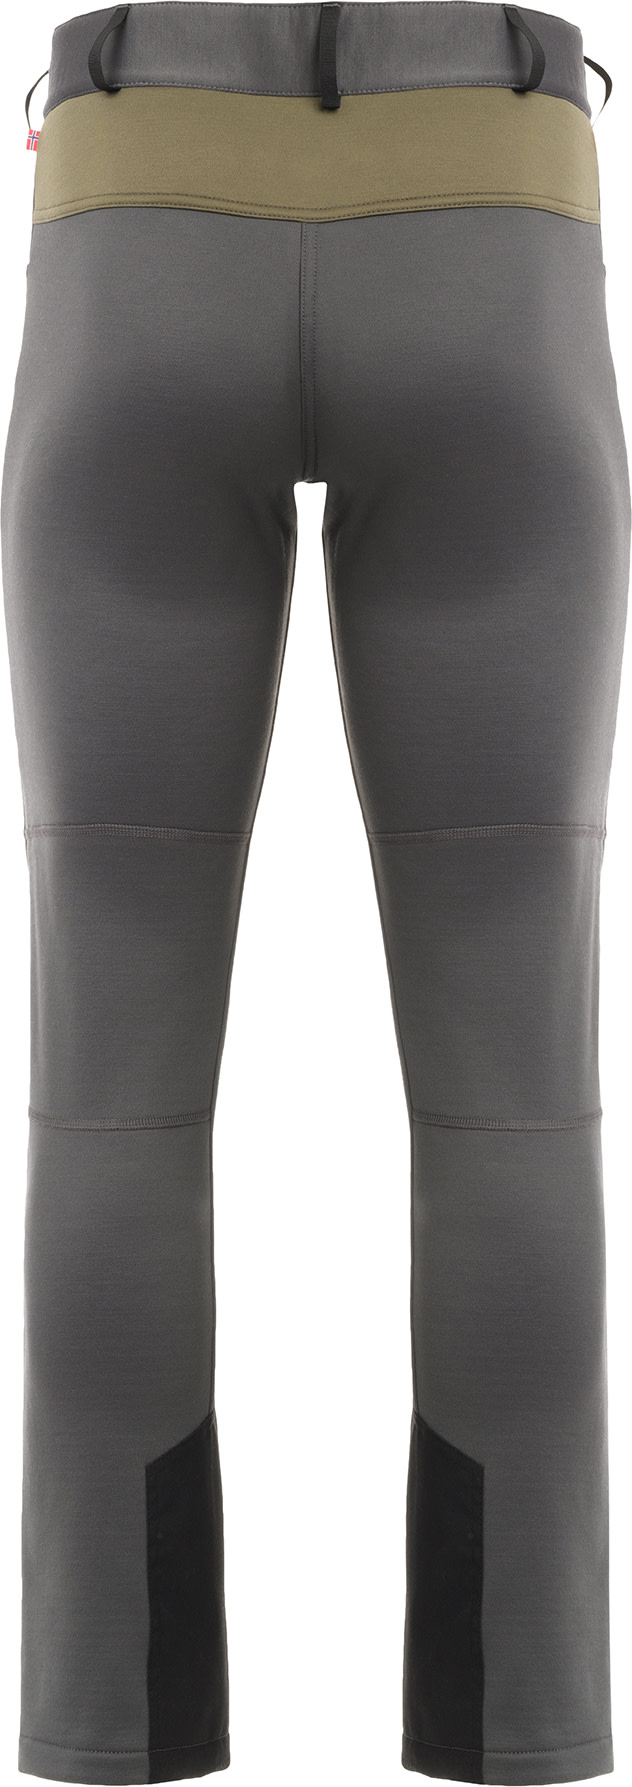 Haglöfs Women's Rugged Flex Pant Walking Trousers, 43% OFF